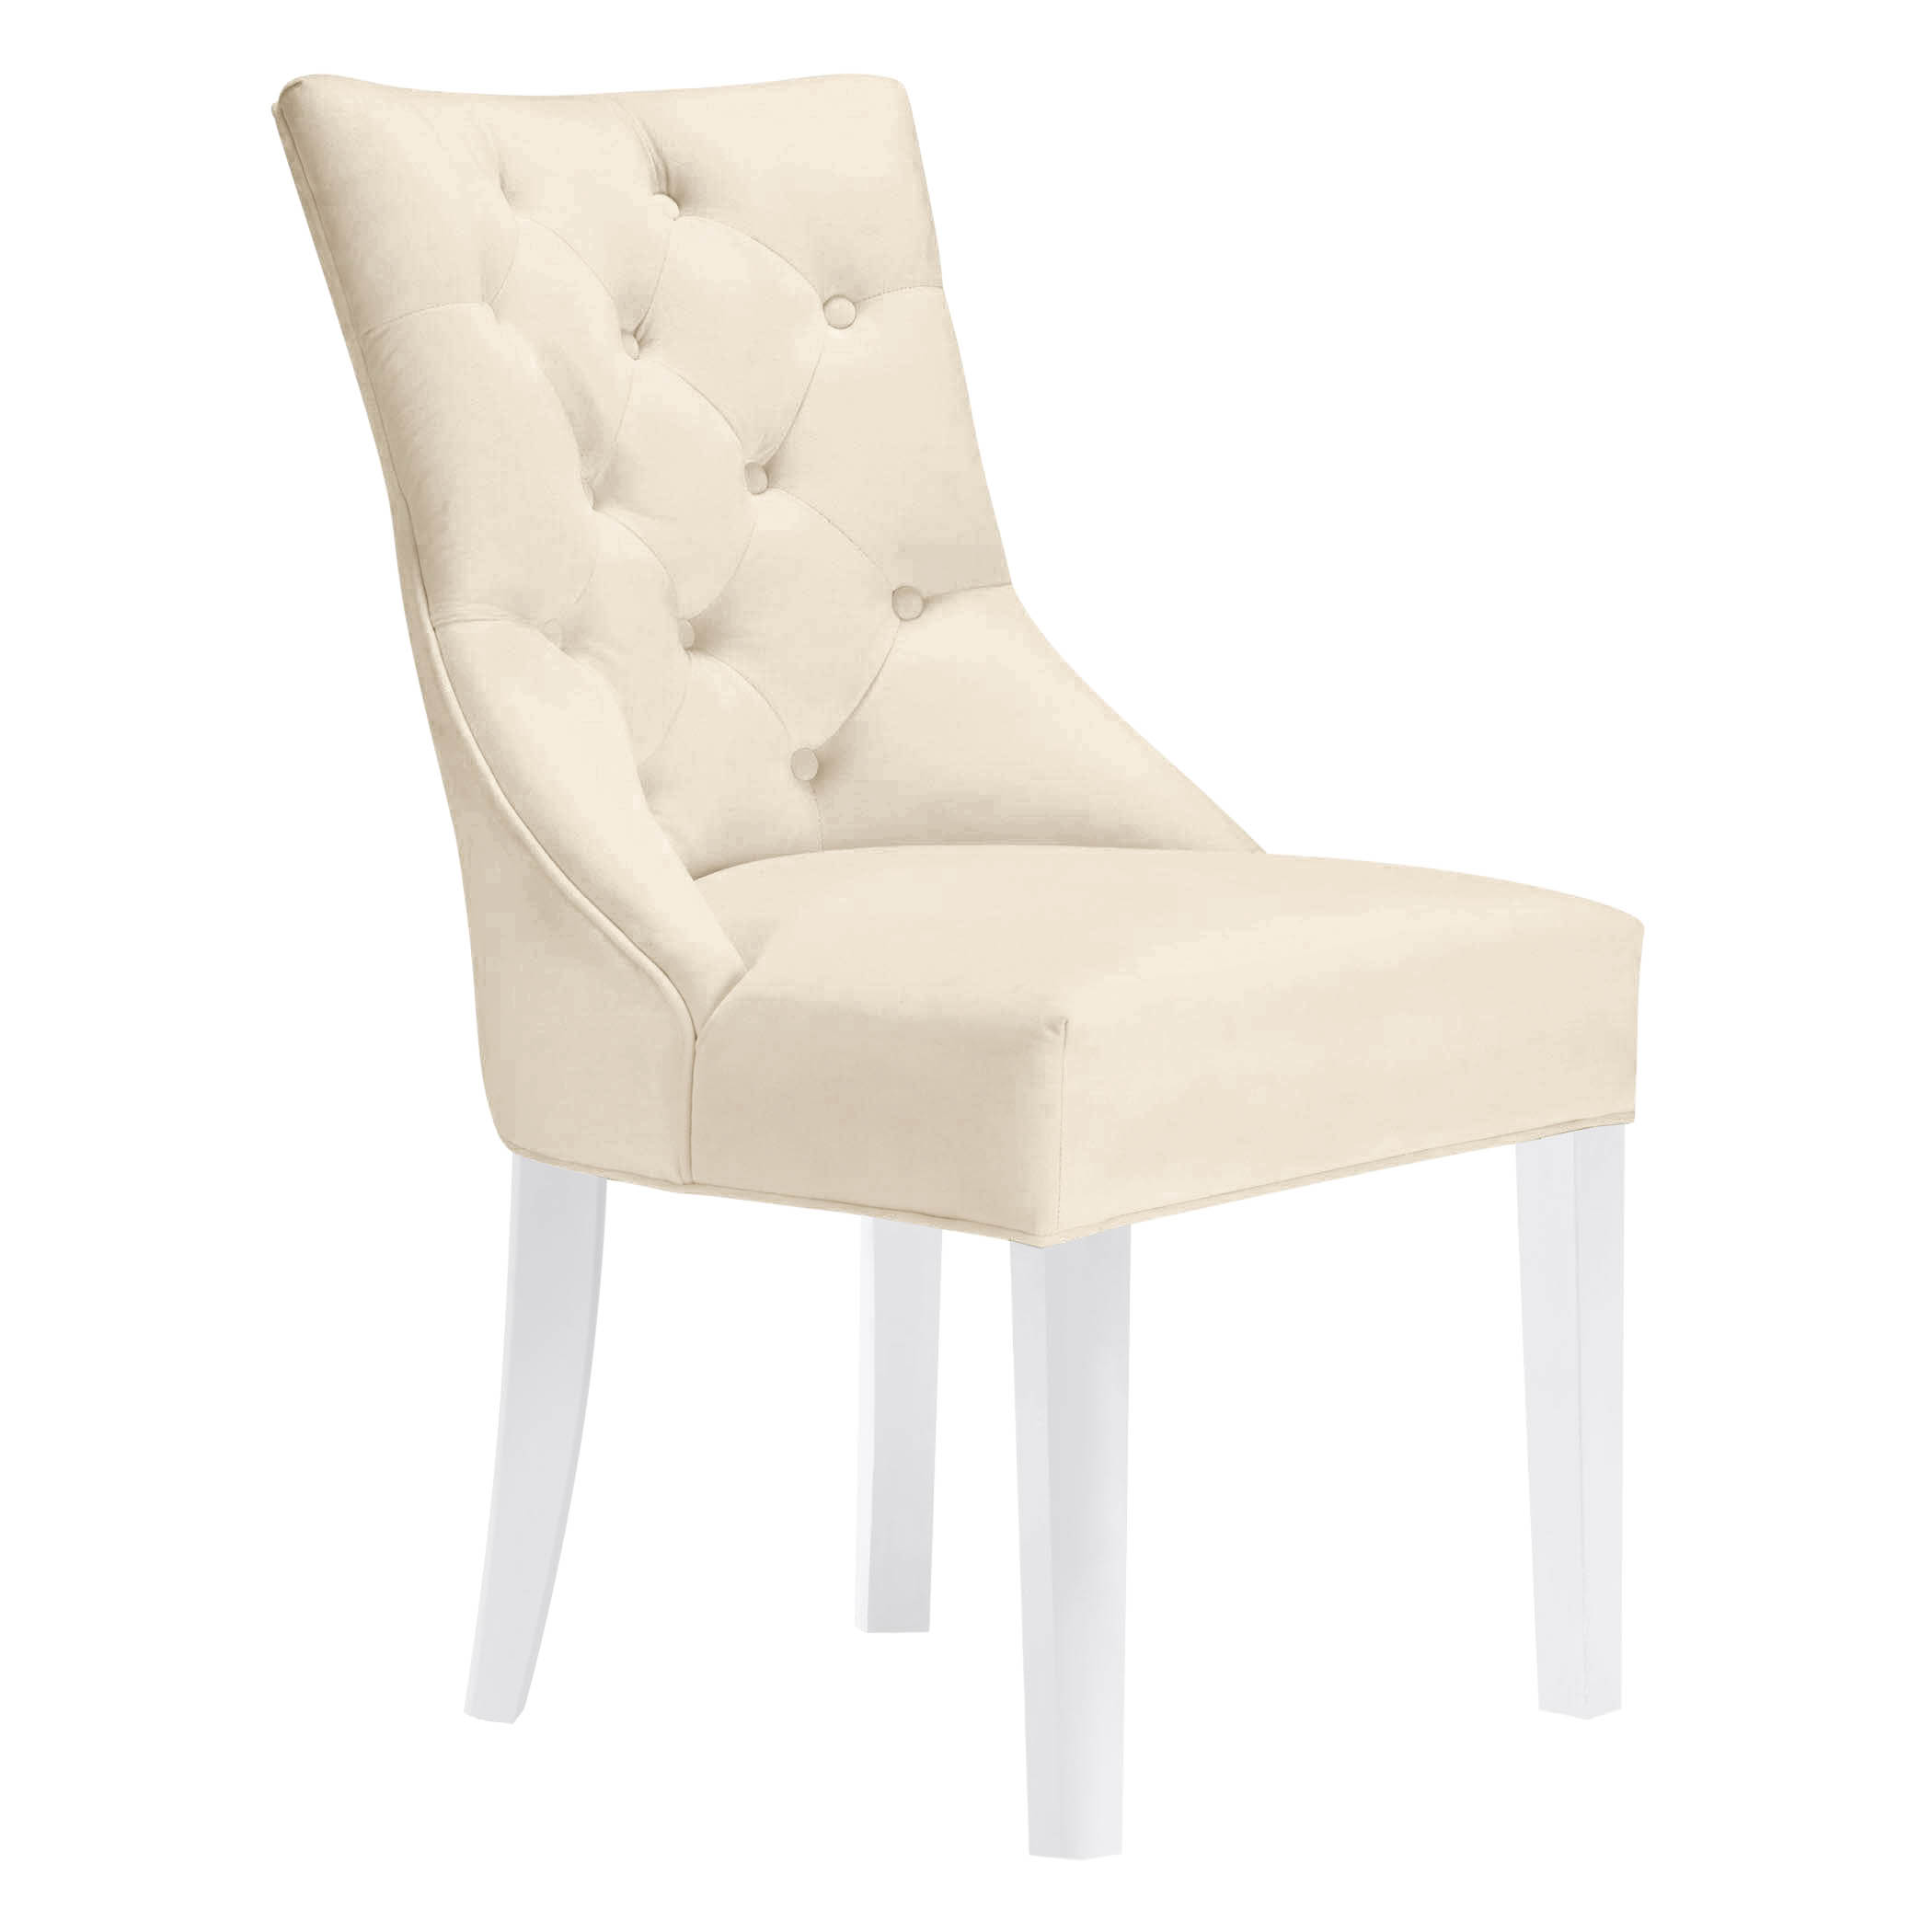 Nottingham Dining Chair - High Gloss White